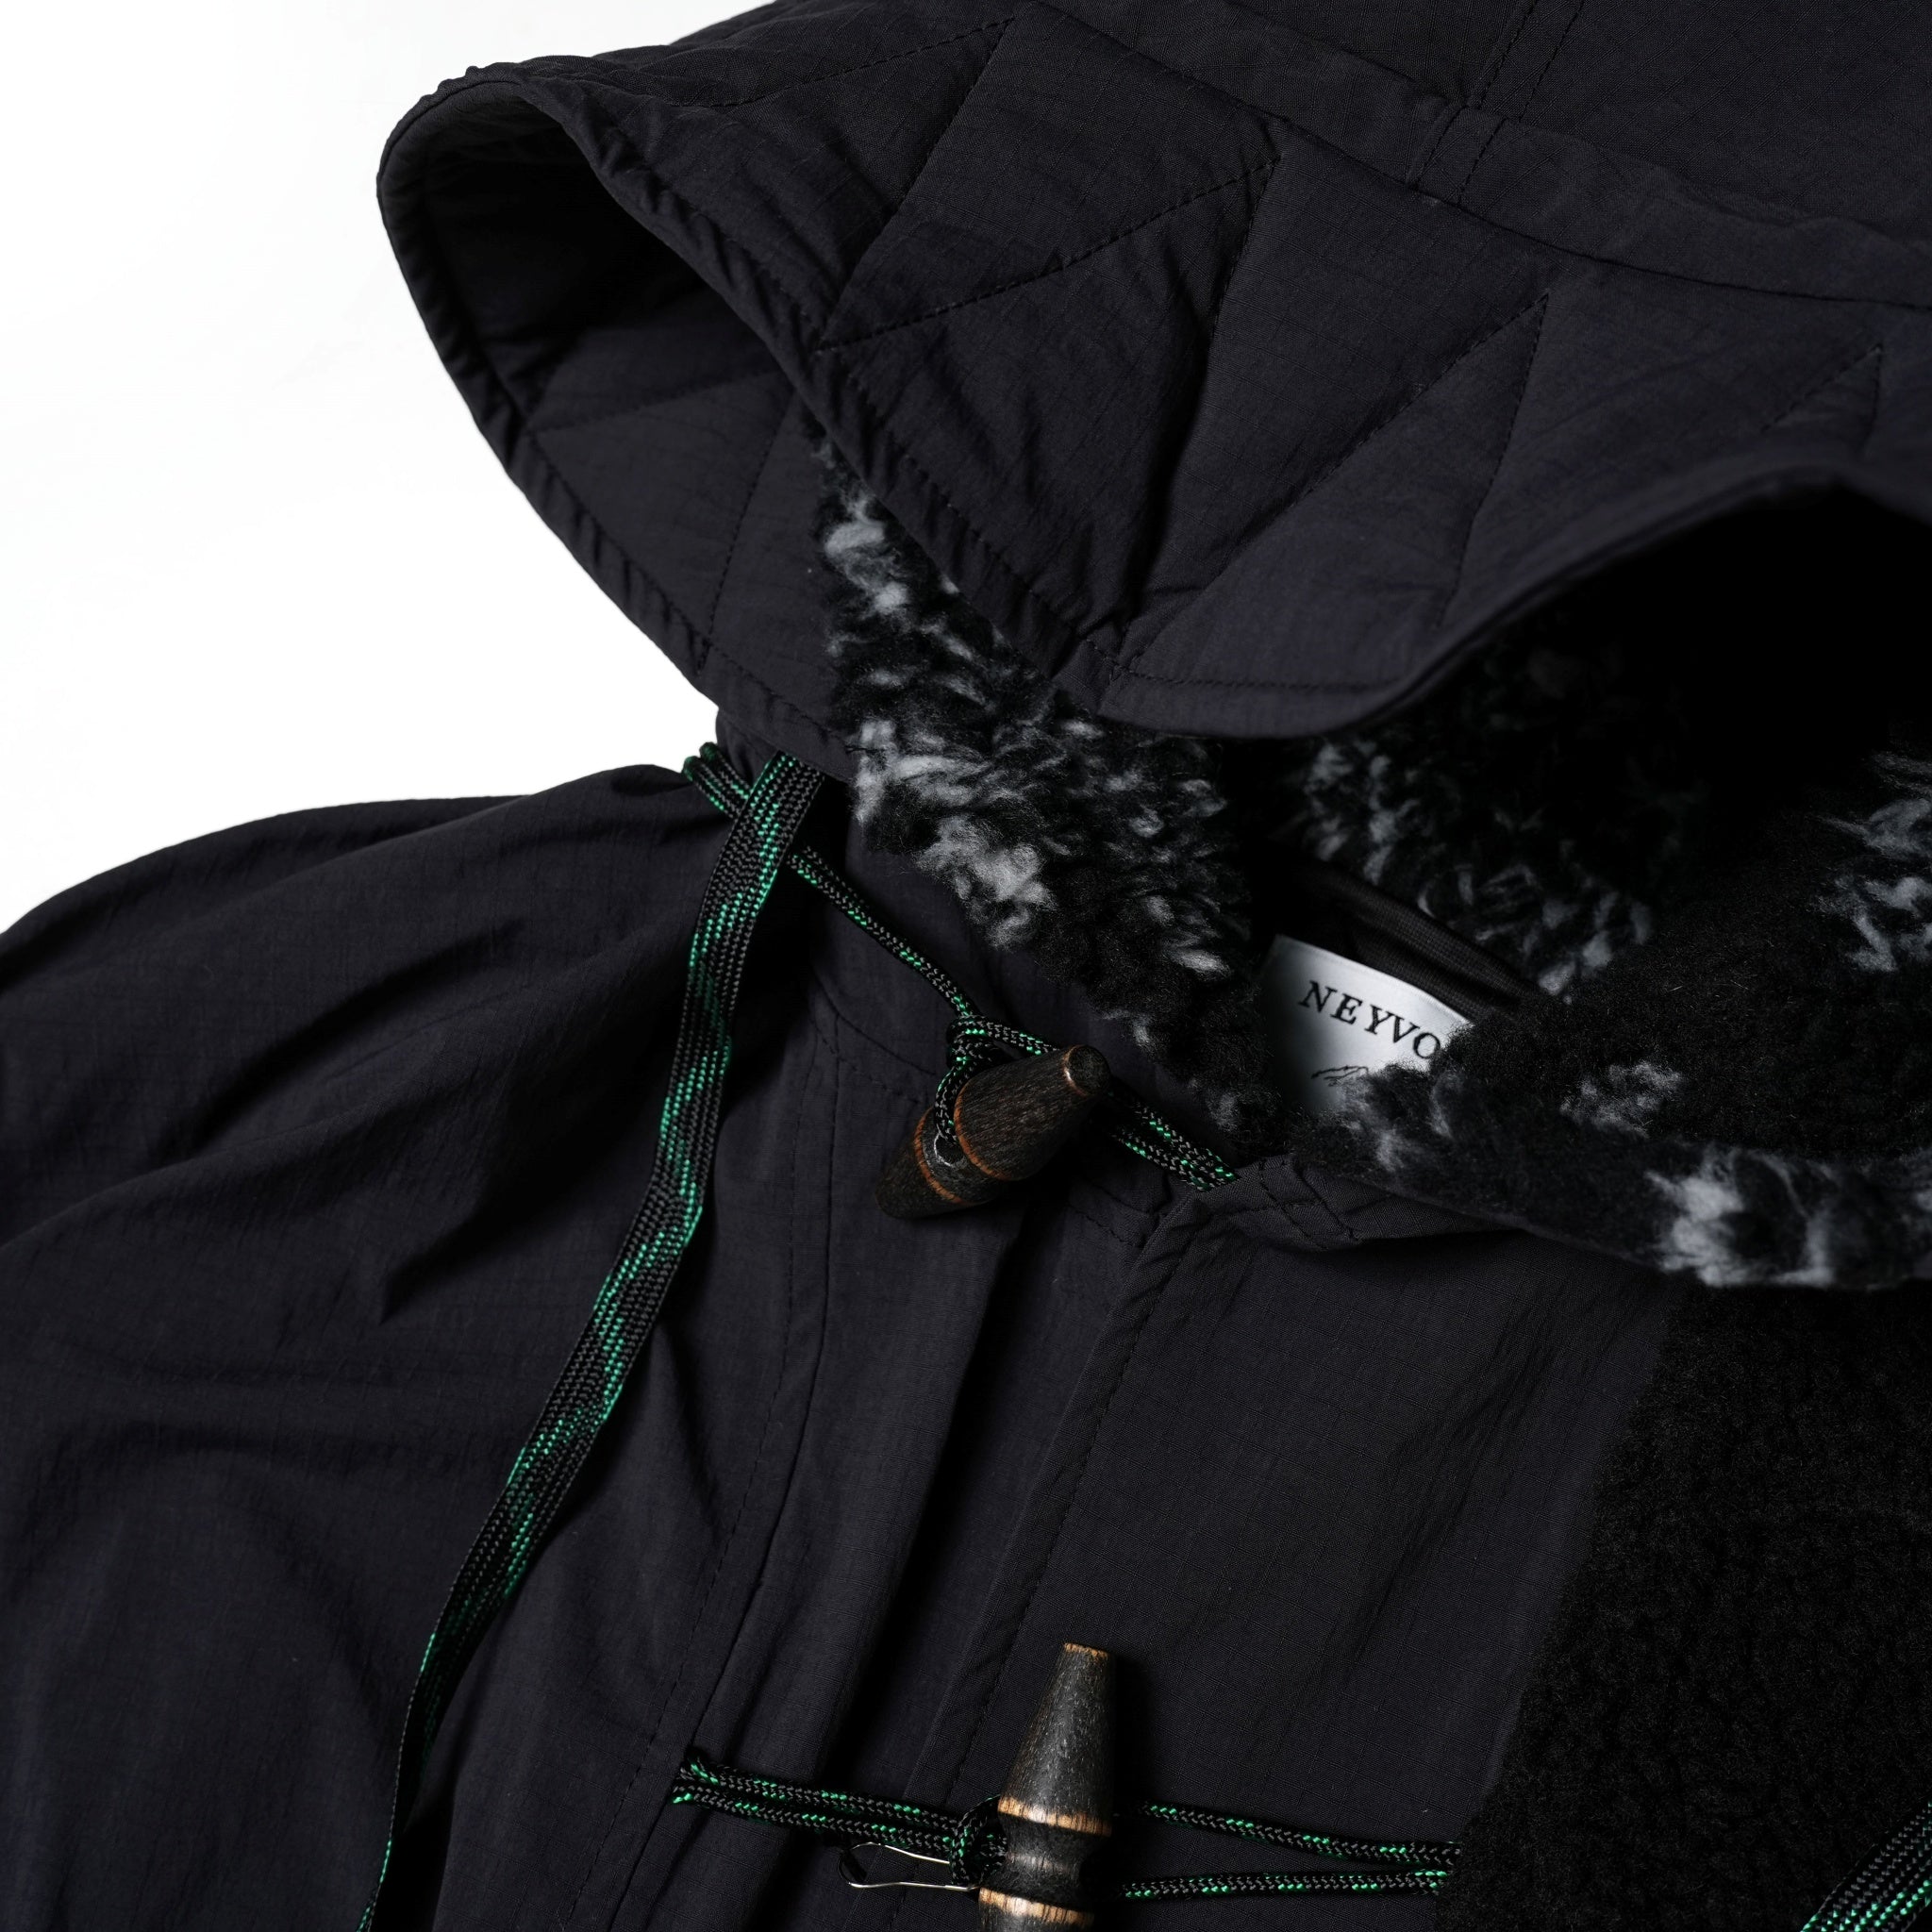 No:NV23AW-02 | Name:CORDURA® Outdoor Duffle Coat | Color:Black